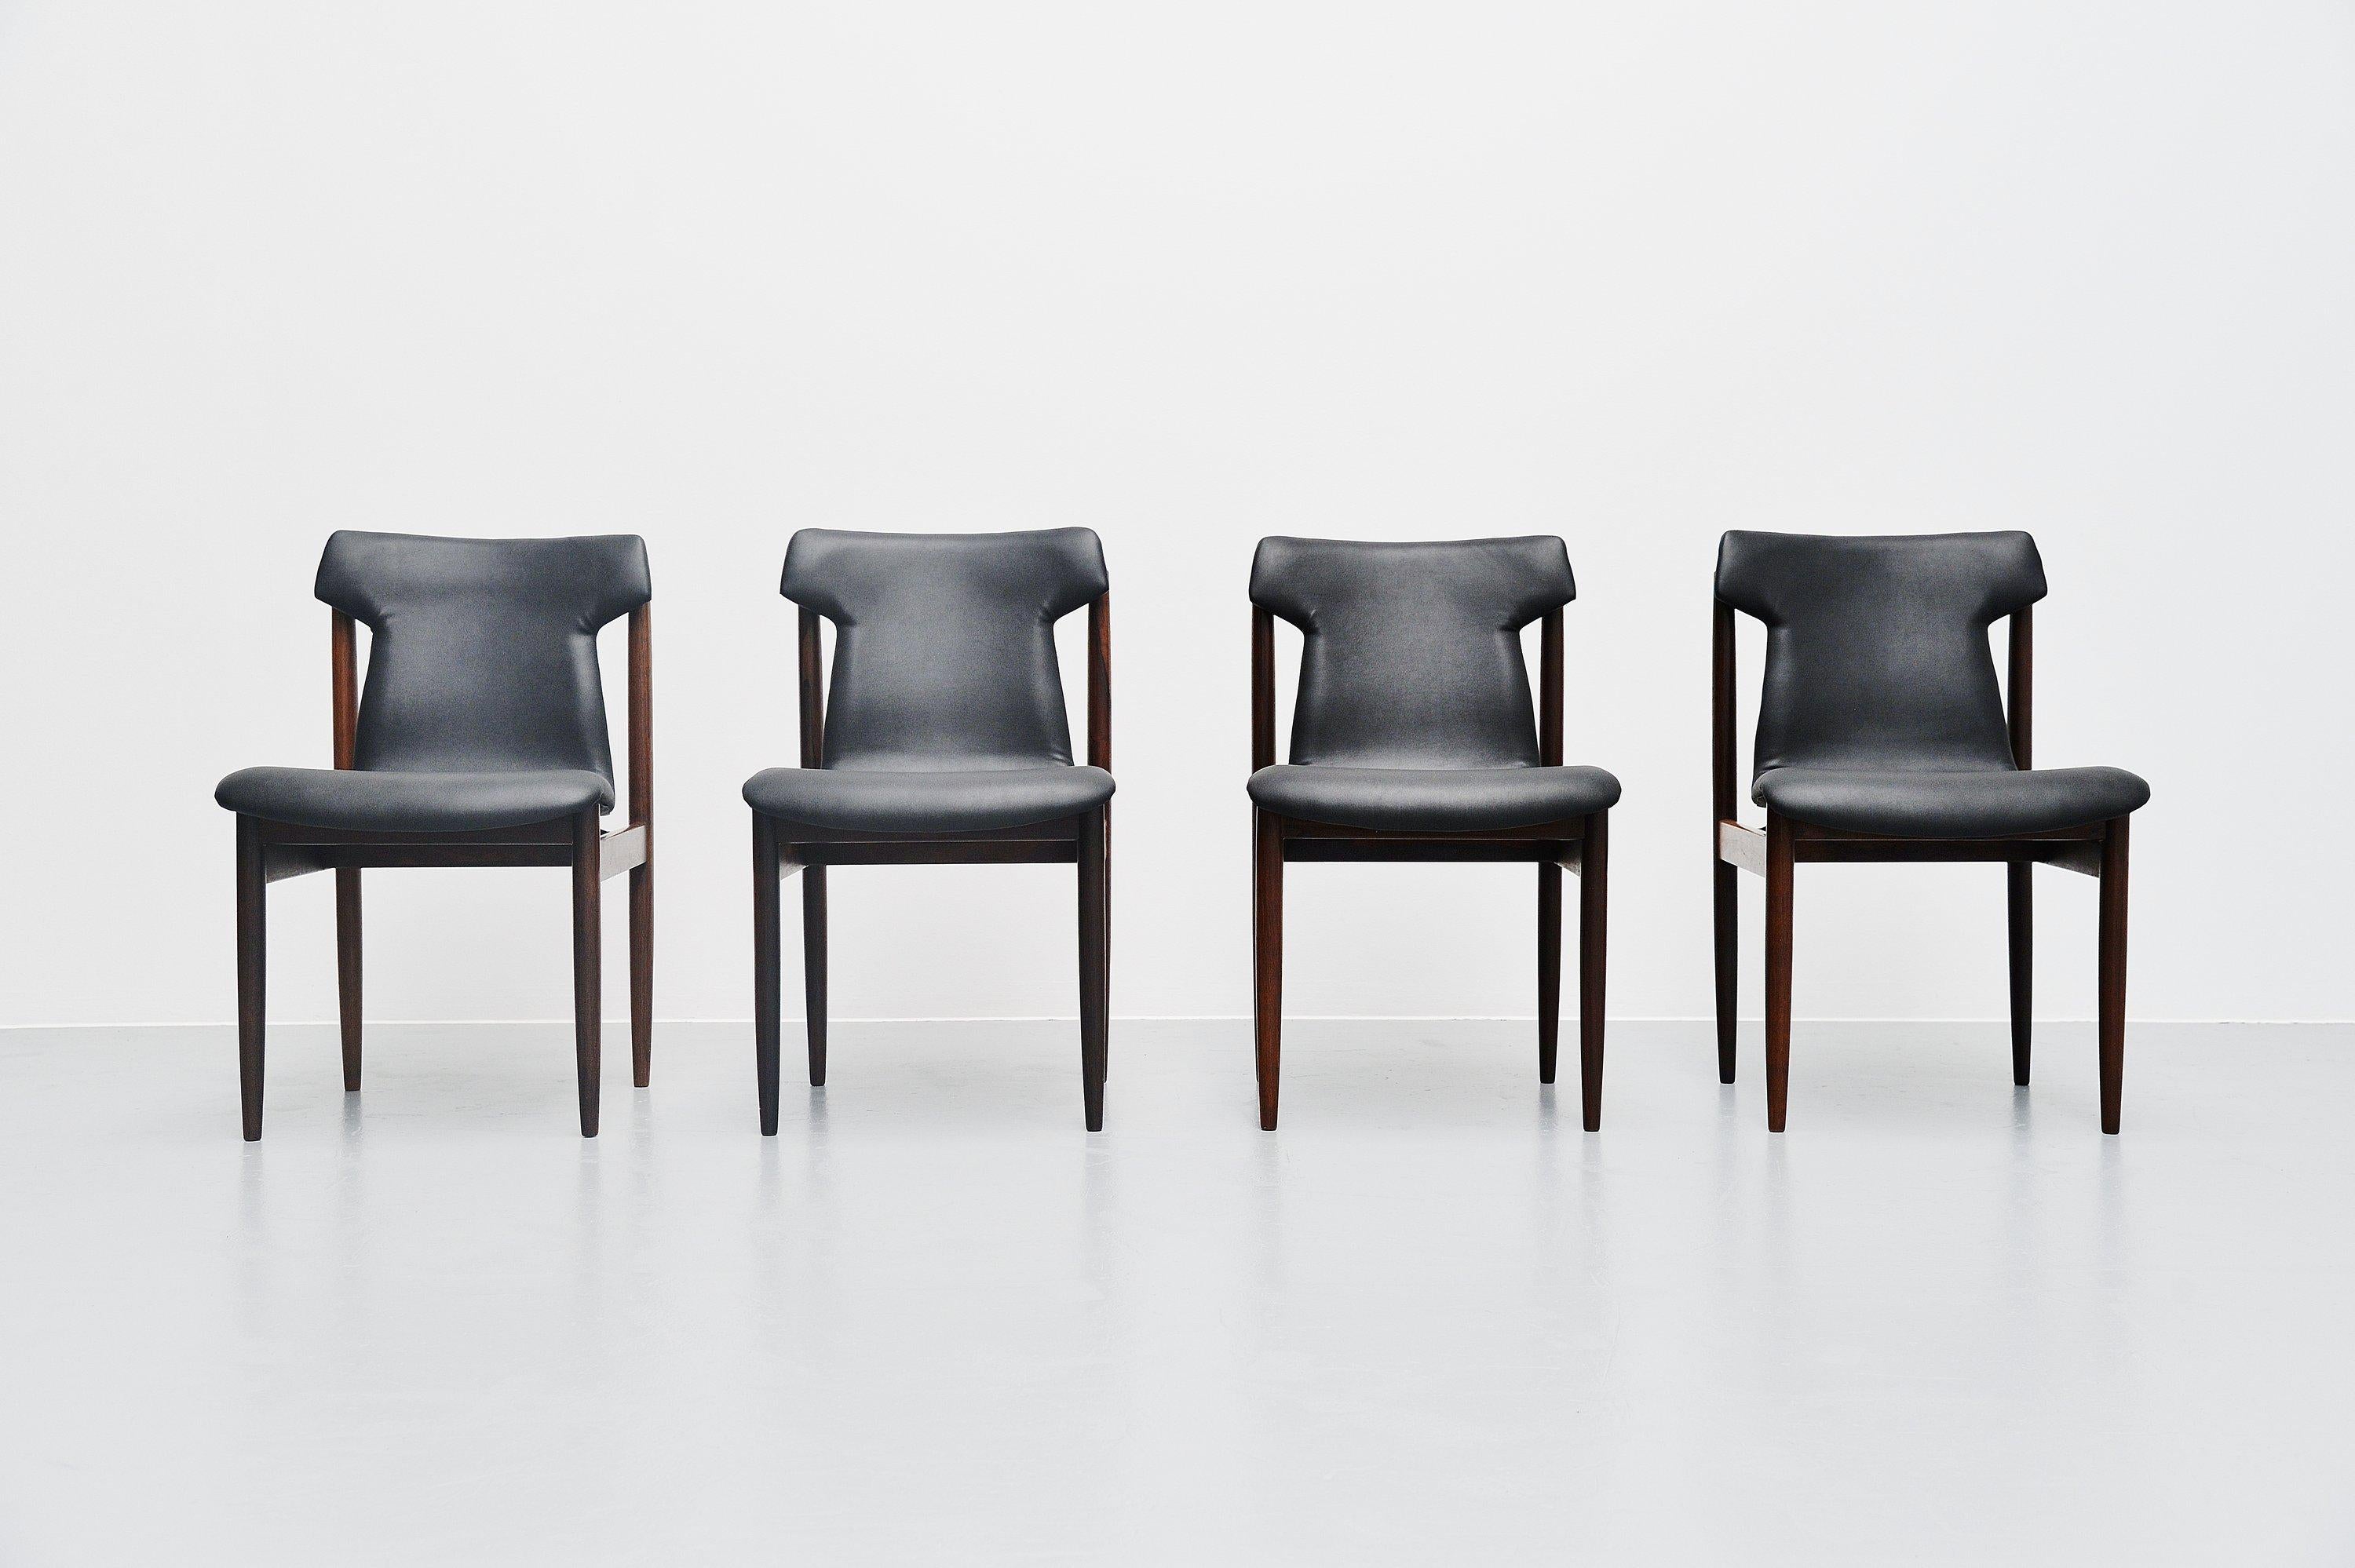 Set of dining chairs designed by Danish designer Inger Klingenberg and manufactured by Fristho Franeker, Holland 1960. Fristho attracted Inger Klingenberg as designer in 1958. The most famous design from Inger Klingenberg is the IK-chair. The chair